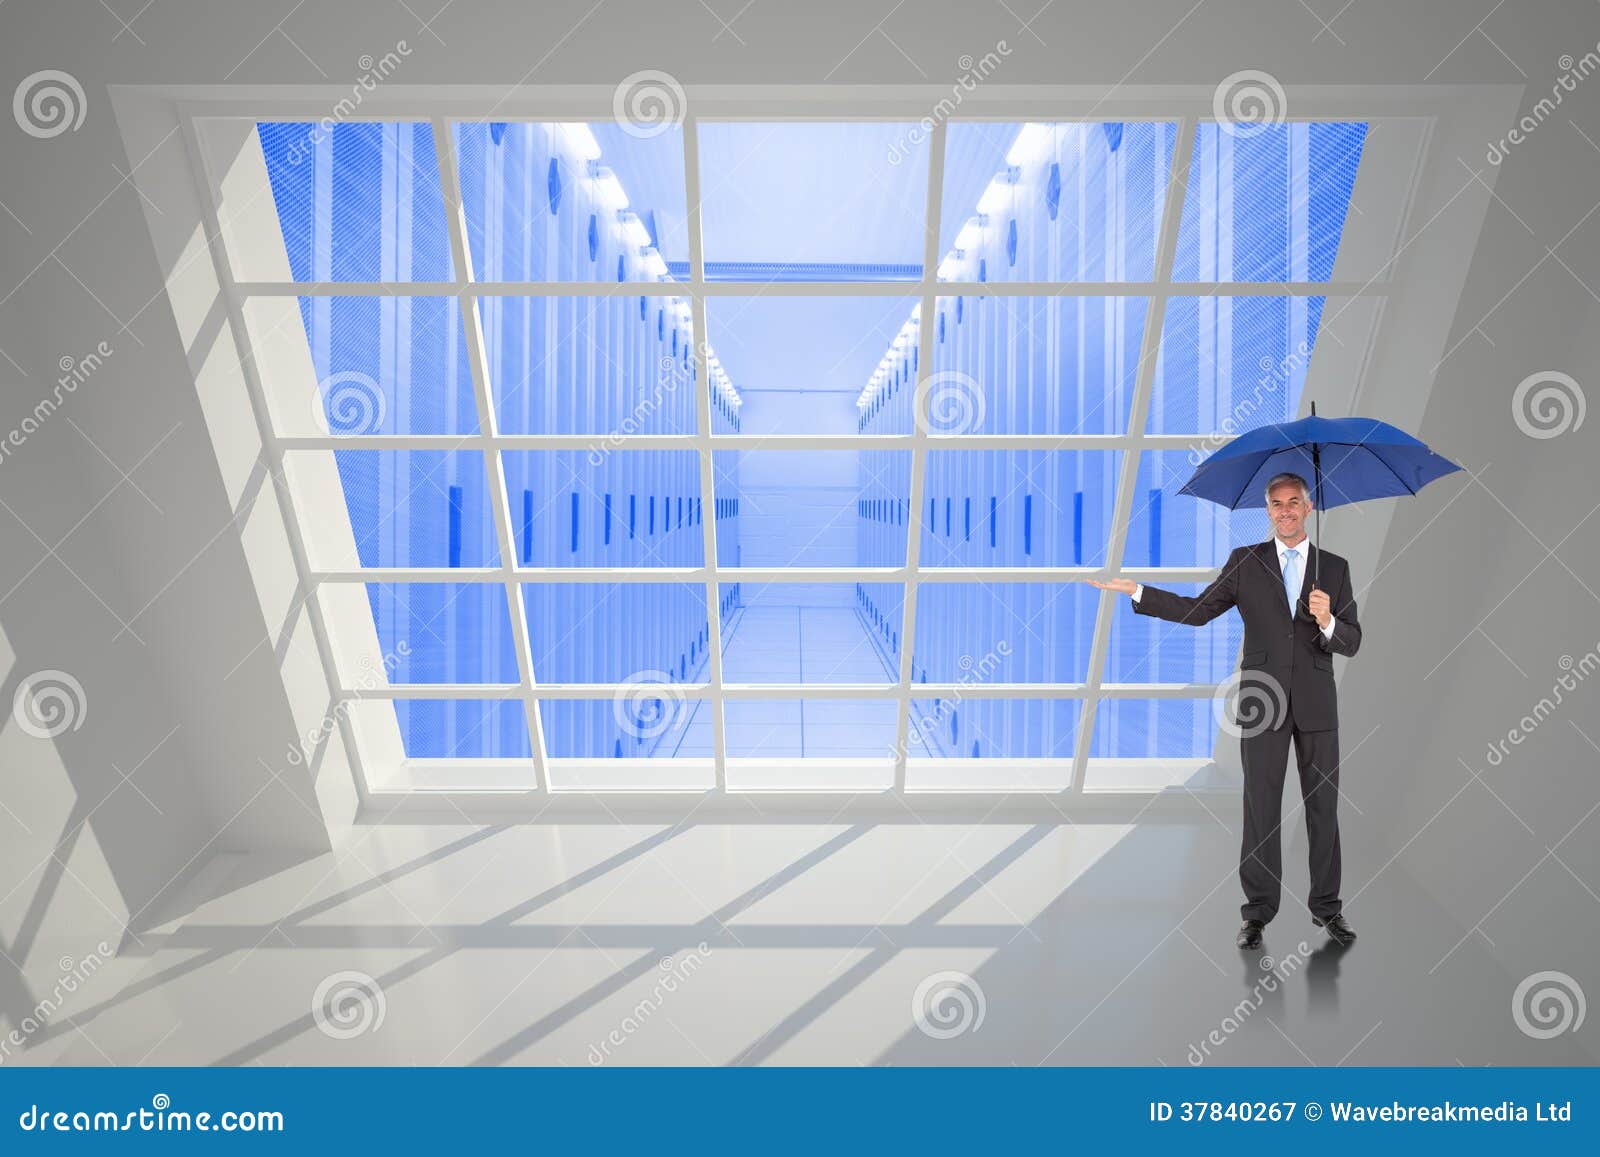 composite image of peaceful businessman holding blue umbrella